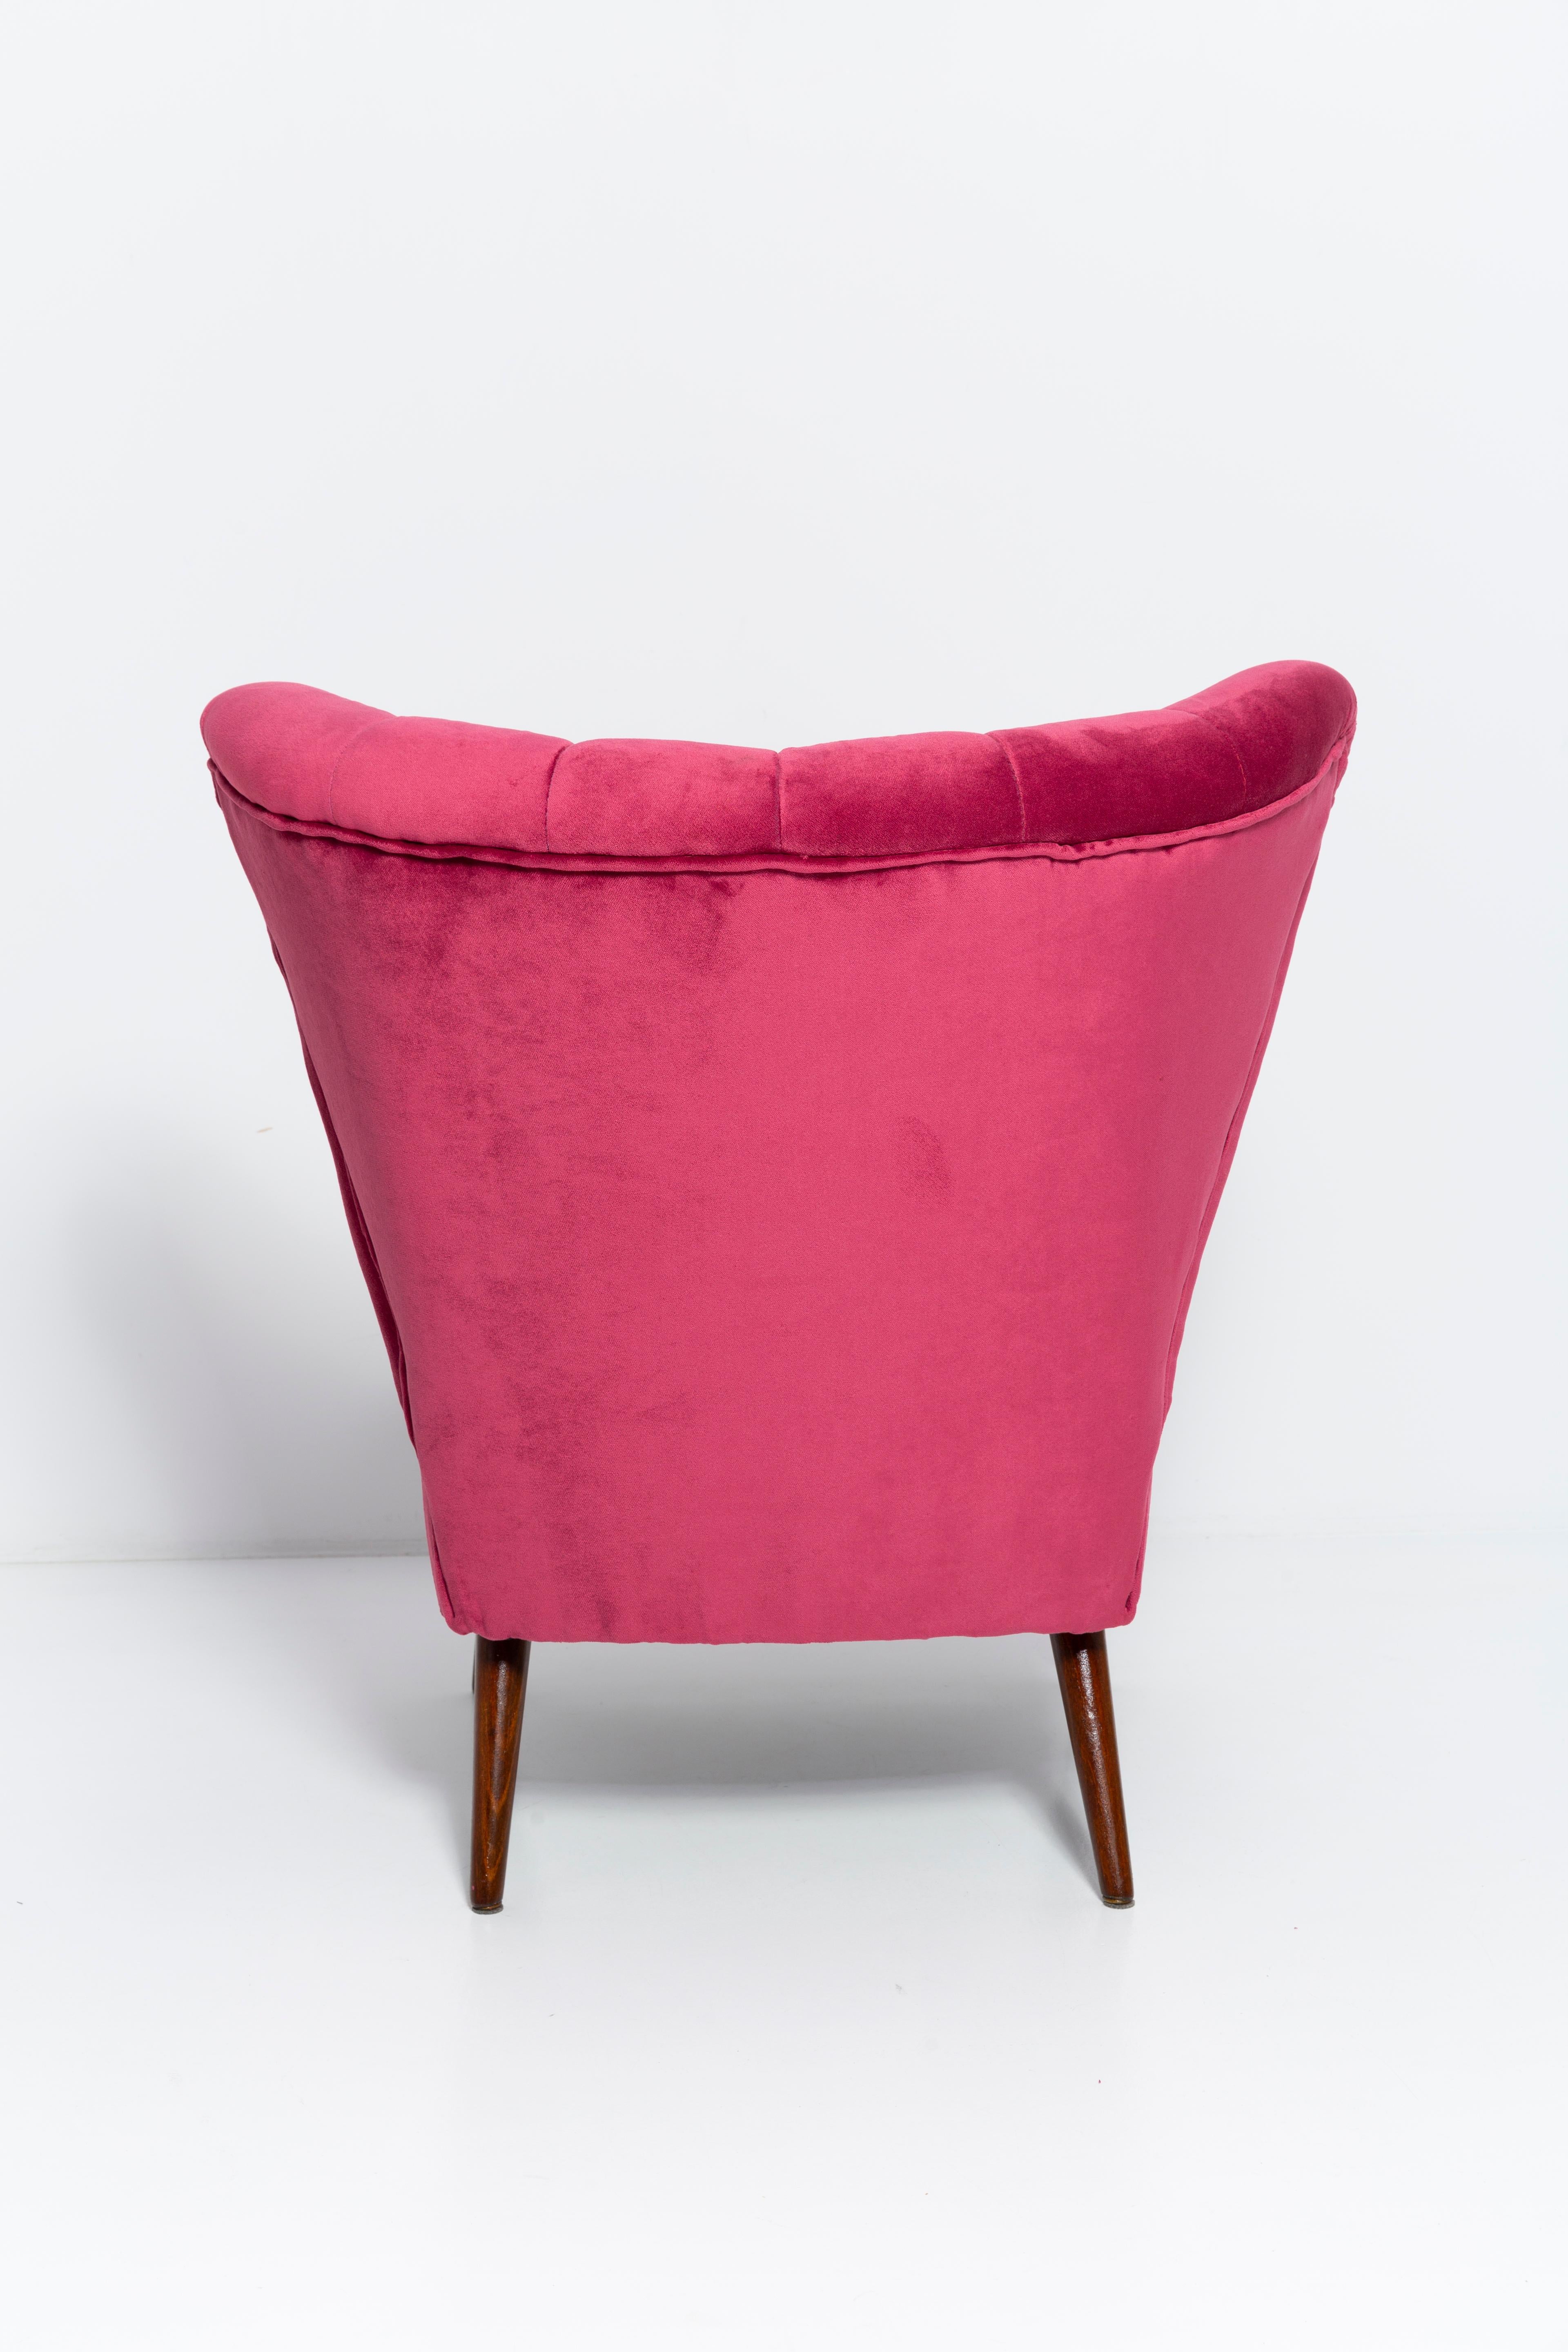 Midcentury Magenta Pink Velvet Club Armchair, Europe, 1960s For Sale 4